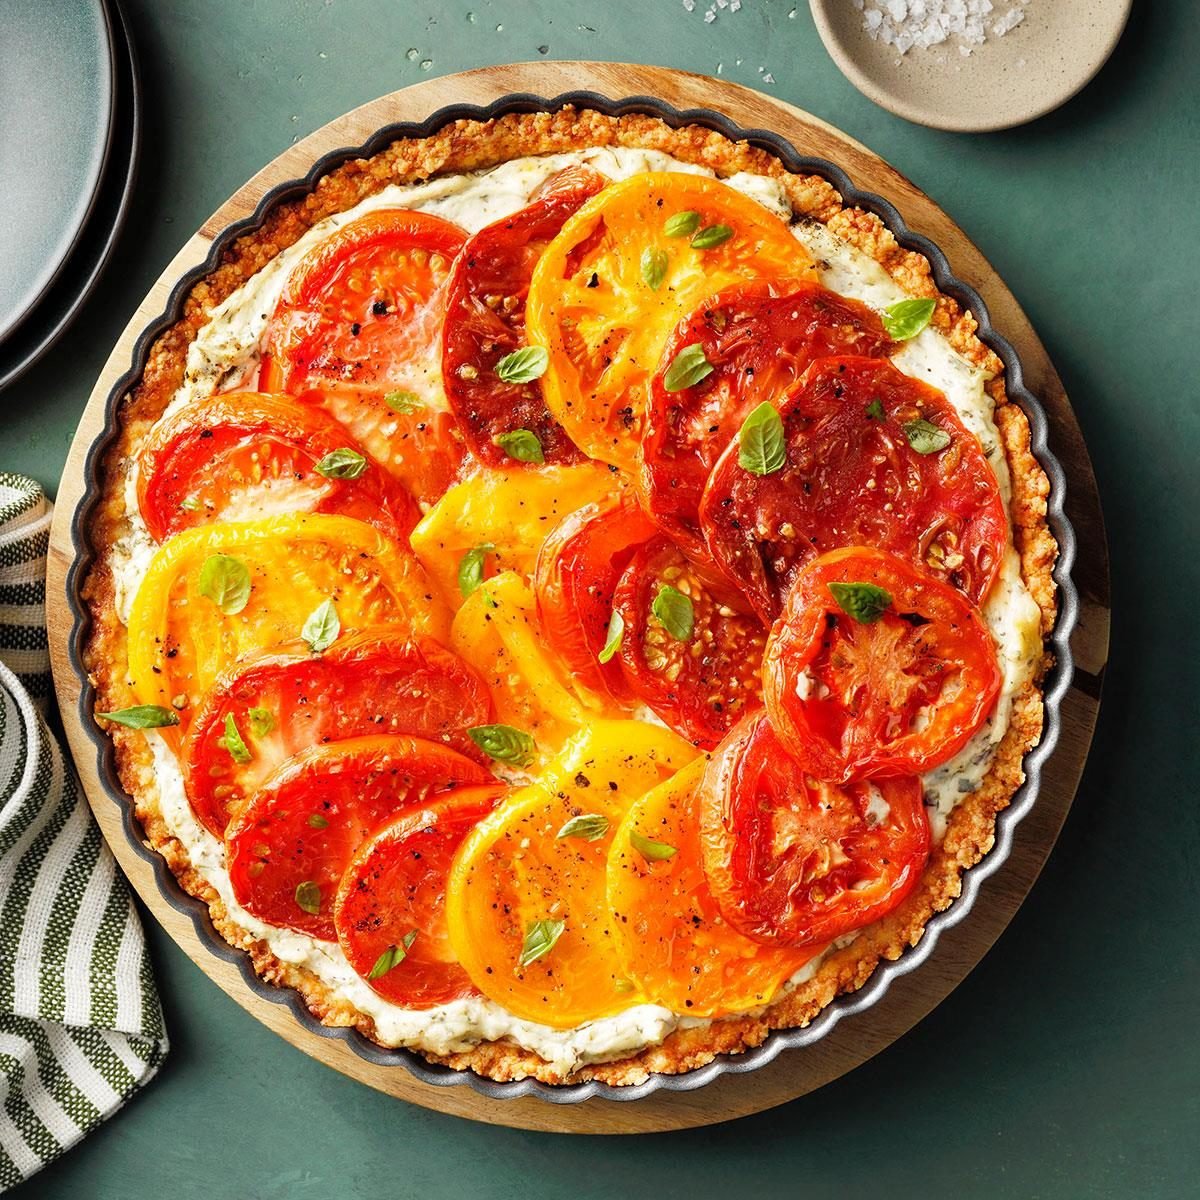 Heirloom Tomato Pie Recipe: How to Make It